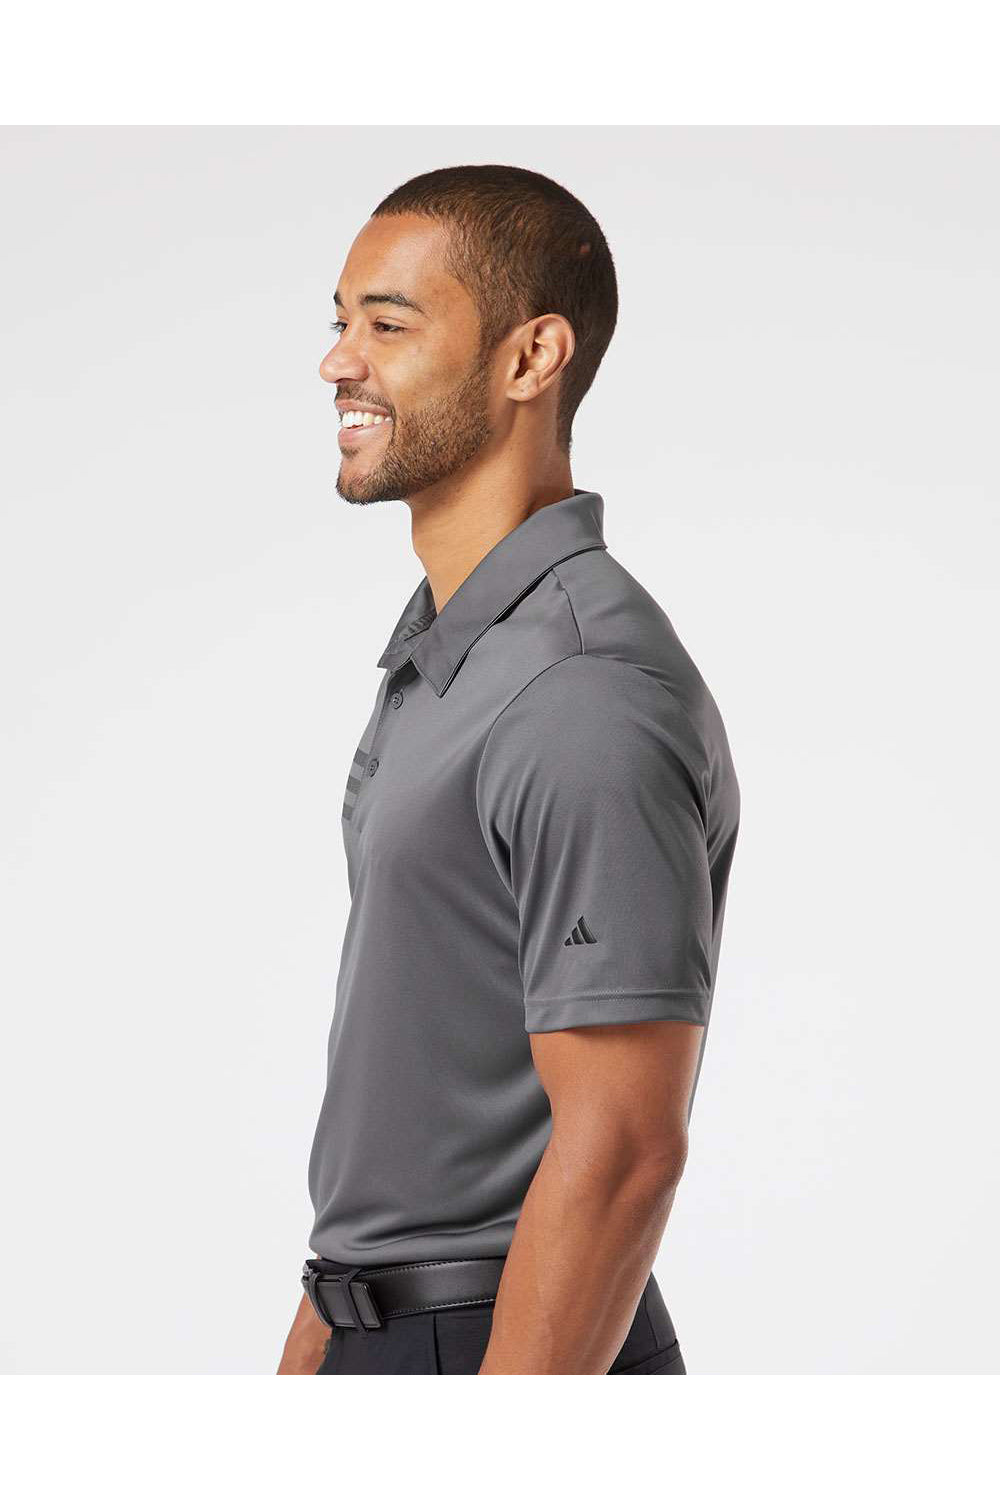 Adidas A324 Mens 3 Stripes Short Sleeve Polo Shirt Grey/Black Model Side